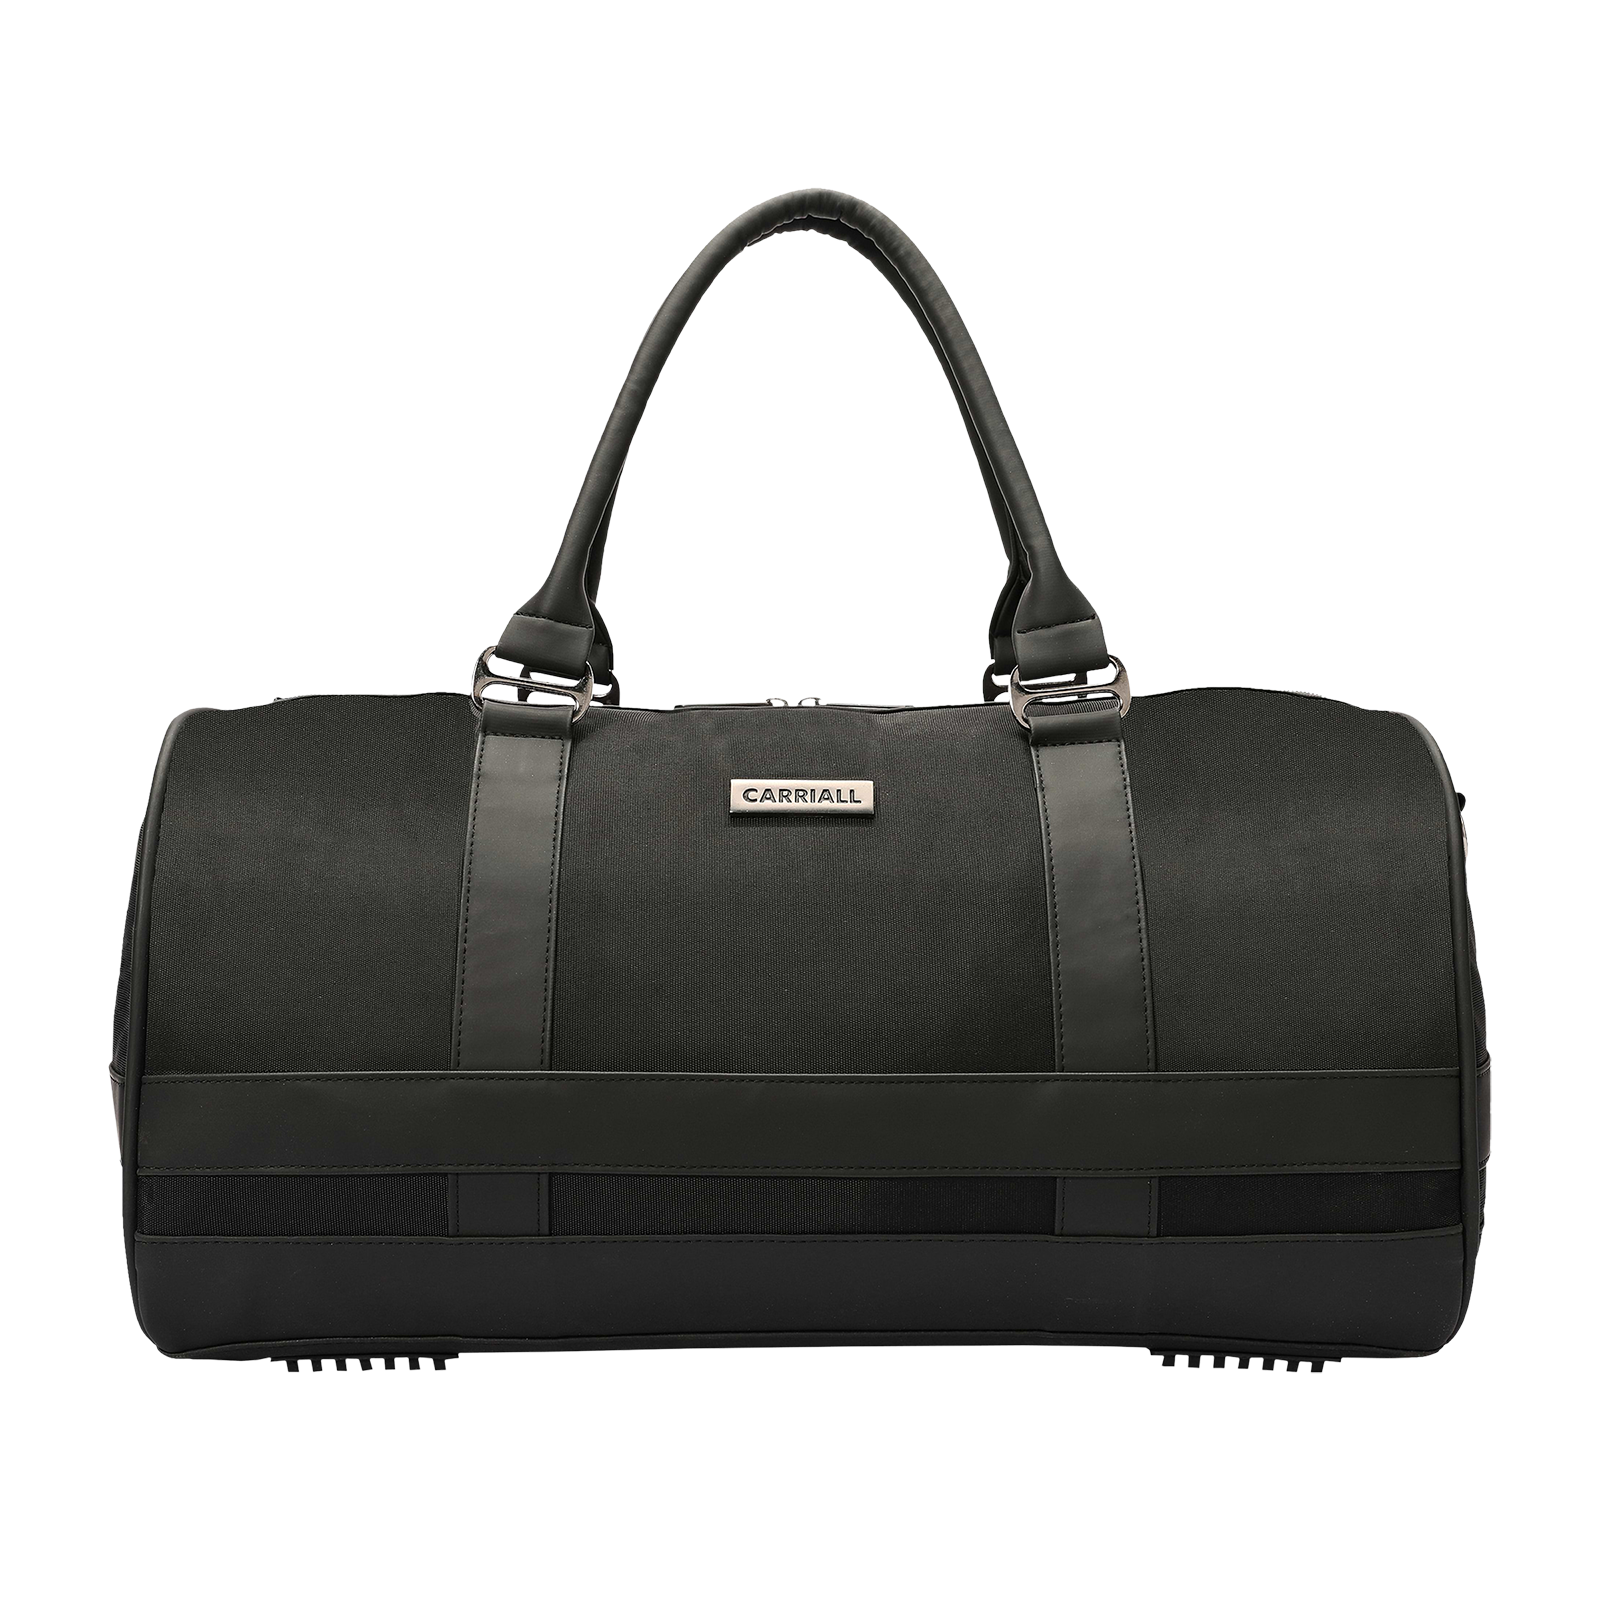 Carriall Astute Matte Finish Fabric Duffle Bag (Detachable Shoulder Strap, CADBASS01, Black)